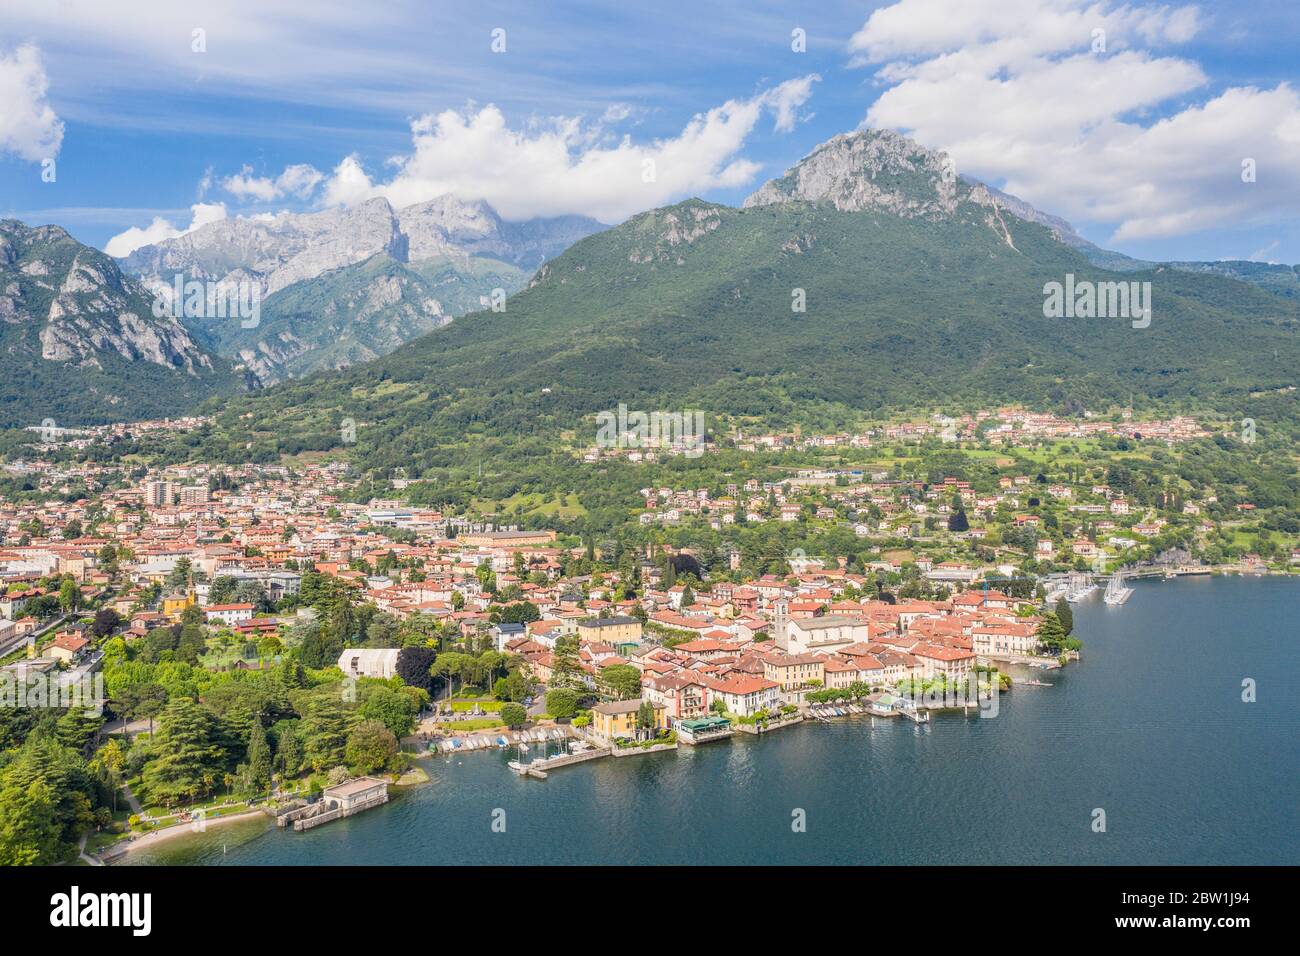 Village of Mandello del Lario, Lake Como. Italy Stock Photo